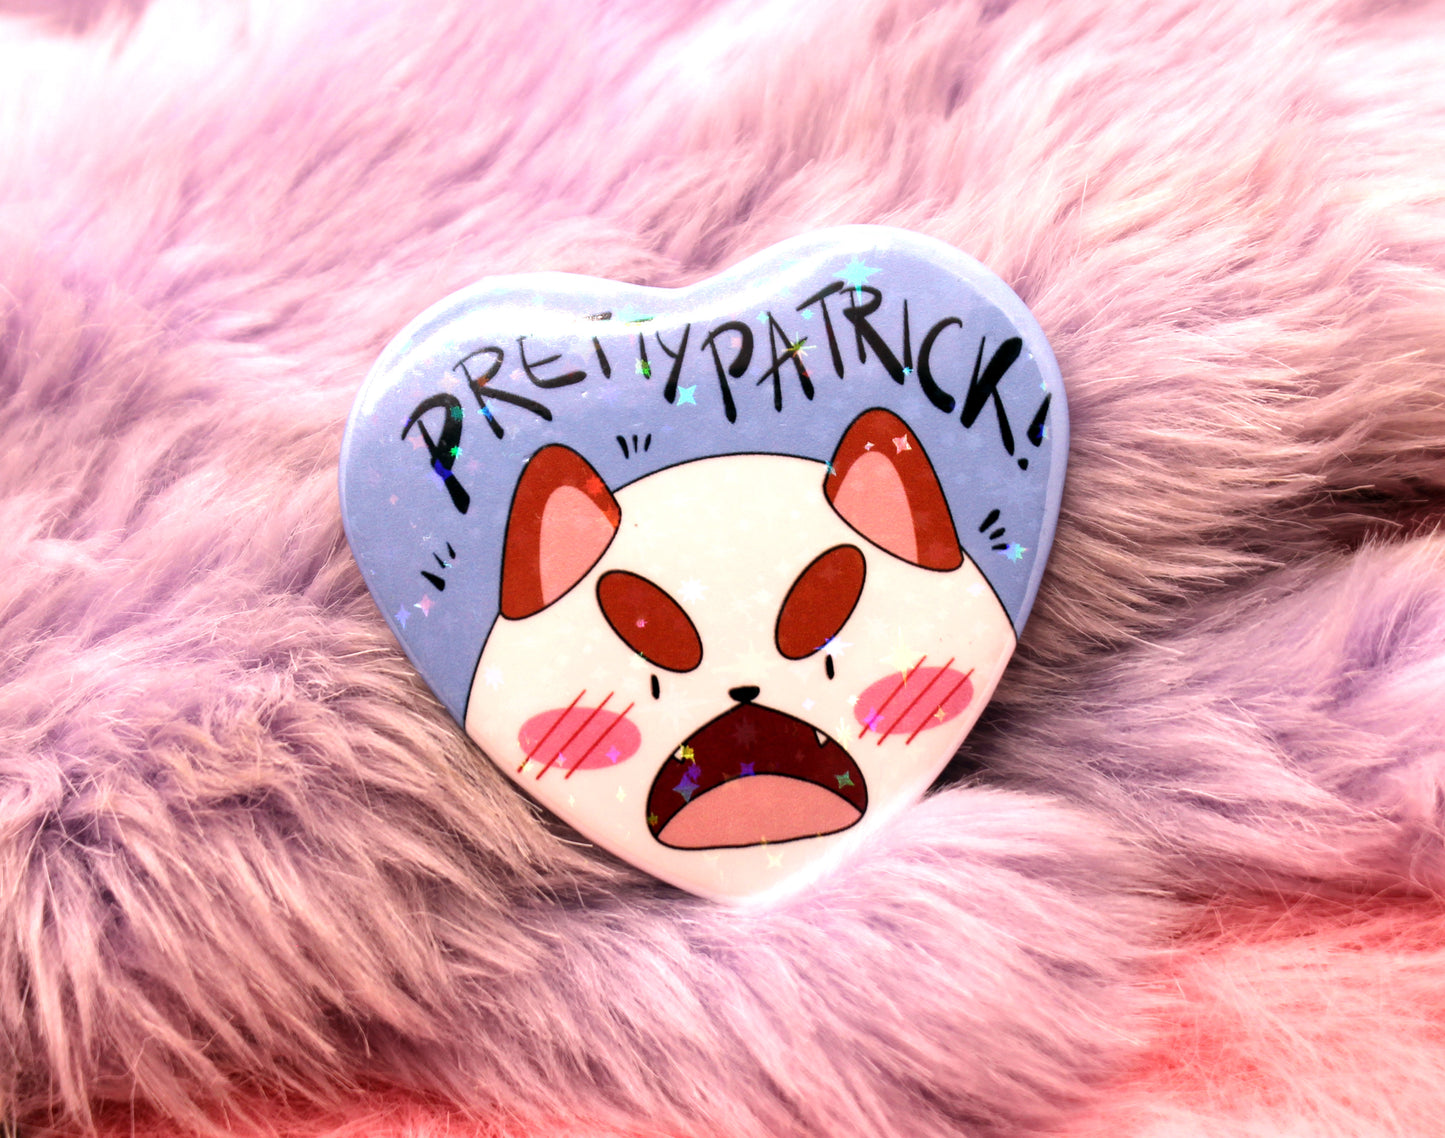 Pretty Patrick PuppyCat Heart Badge (55mm)